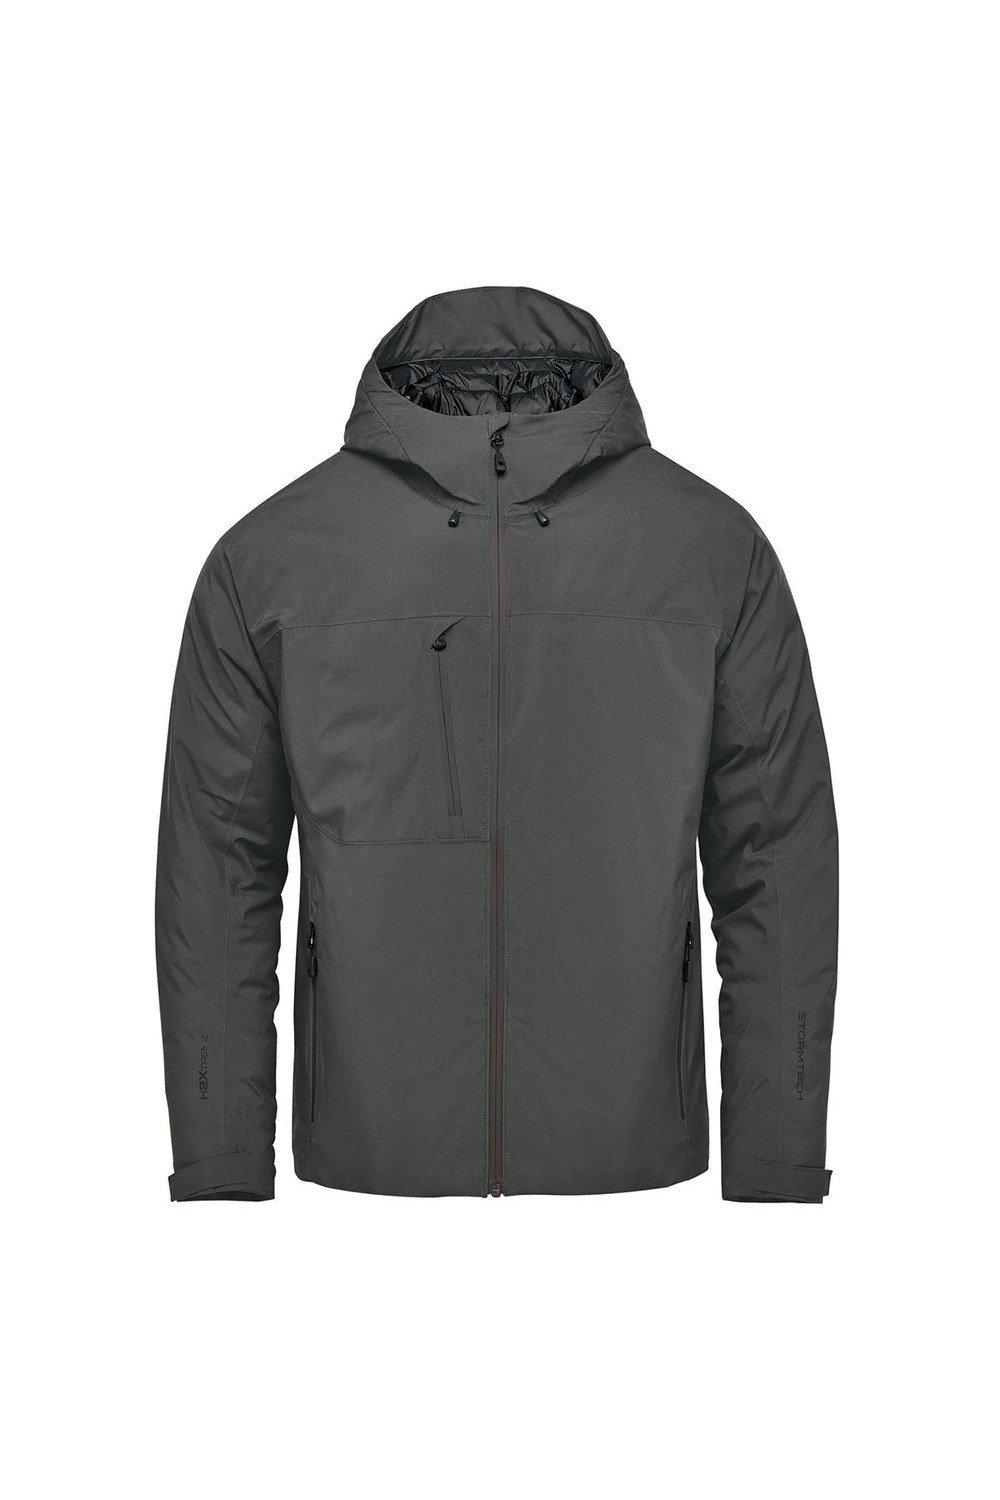 Куртка Nostromo Thermal Soft Shell Stormtech, серый куртка nostromo thermal soft shell stormtech серый